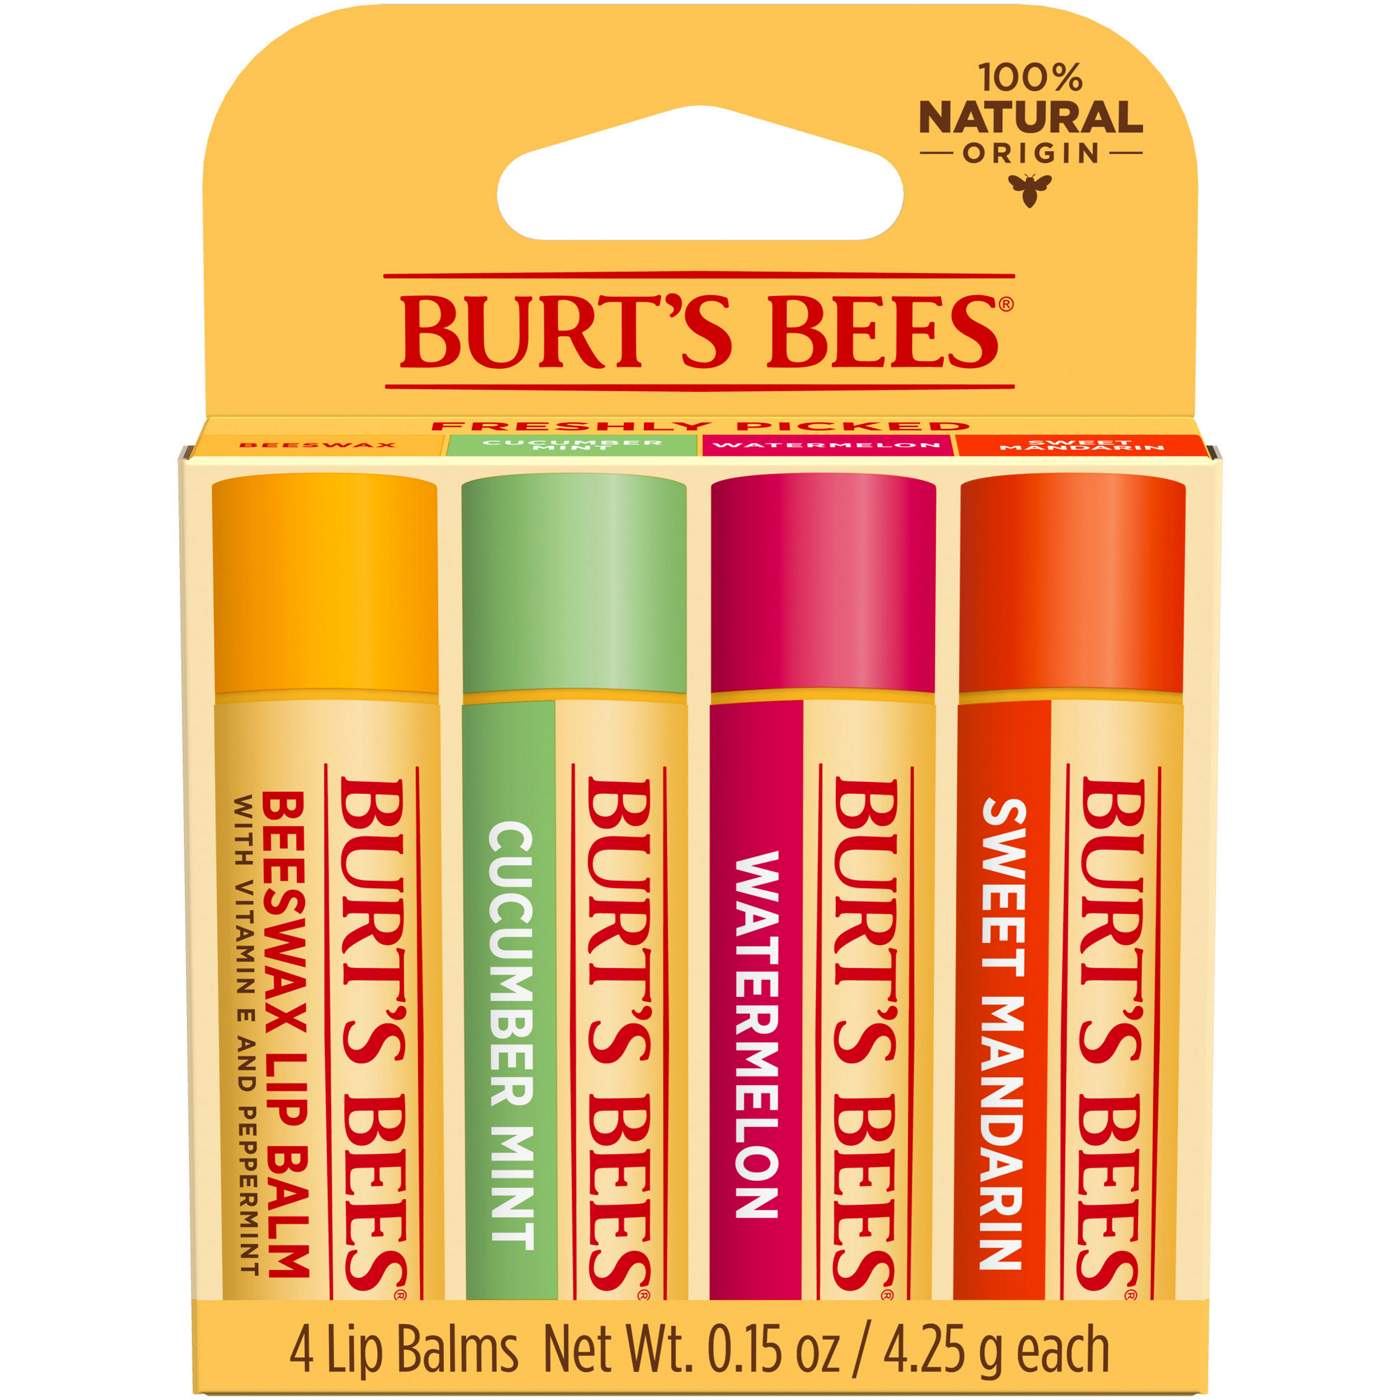 Burt's Bees Beeswax Lip Balm 0.15 oz.